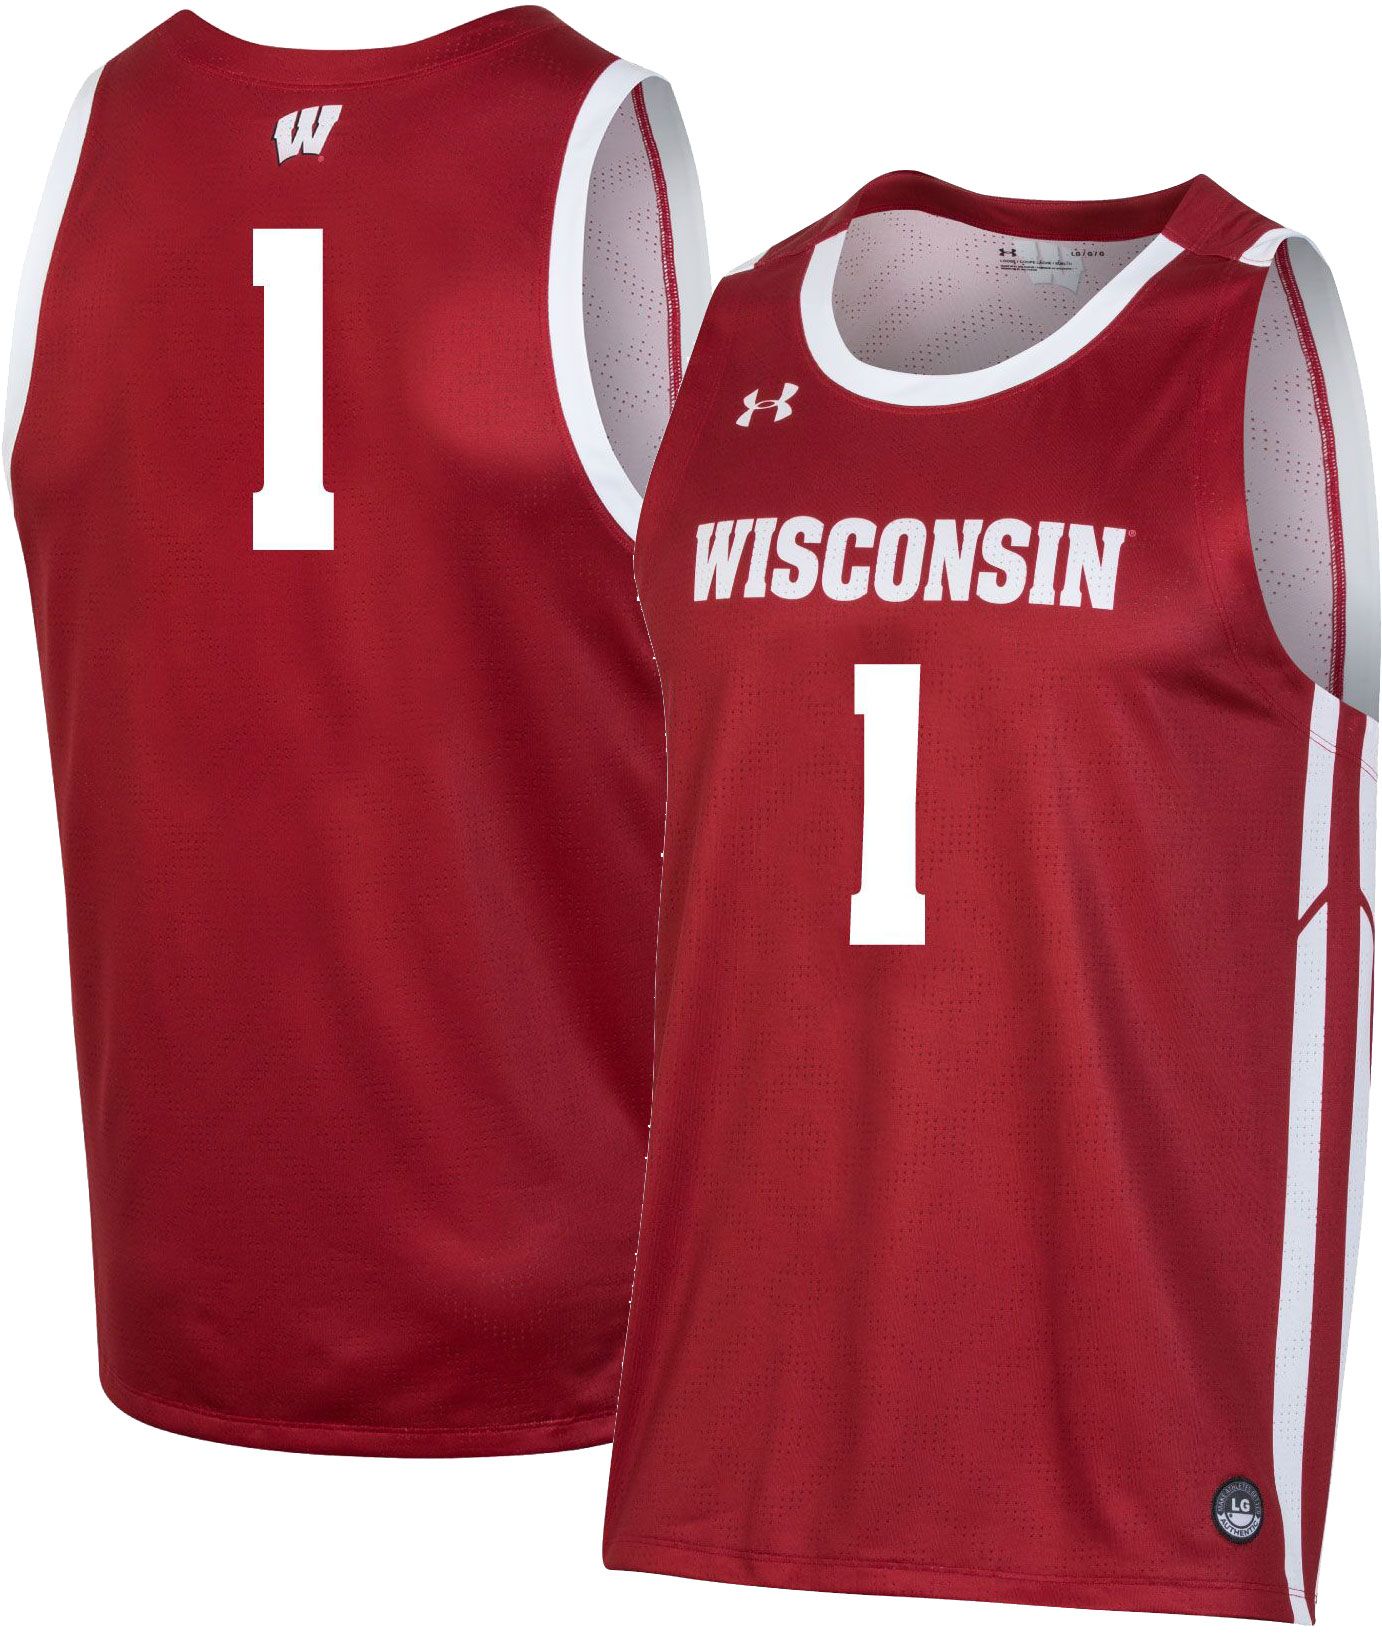 wisconsin badgers basketball jersey